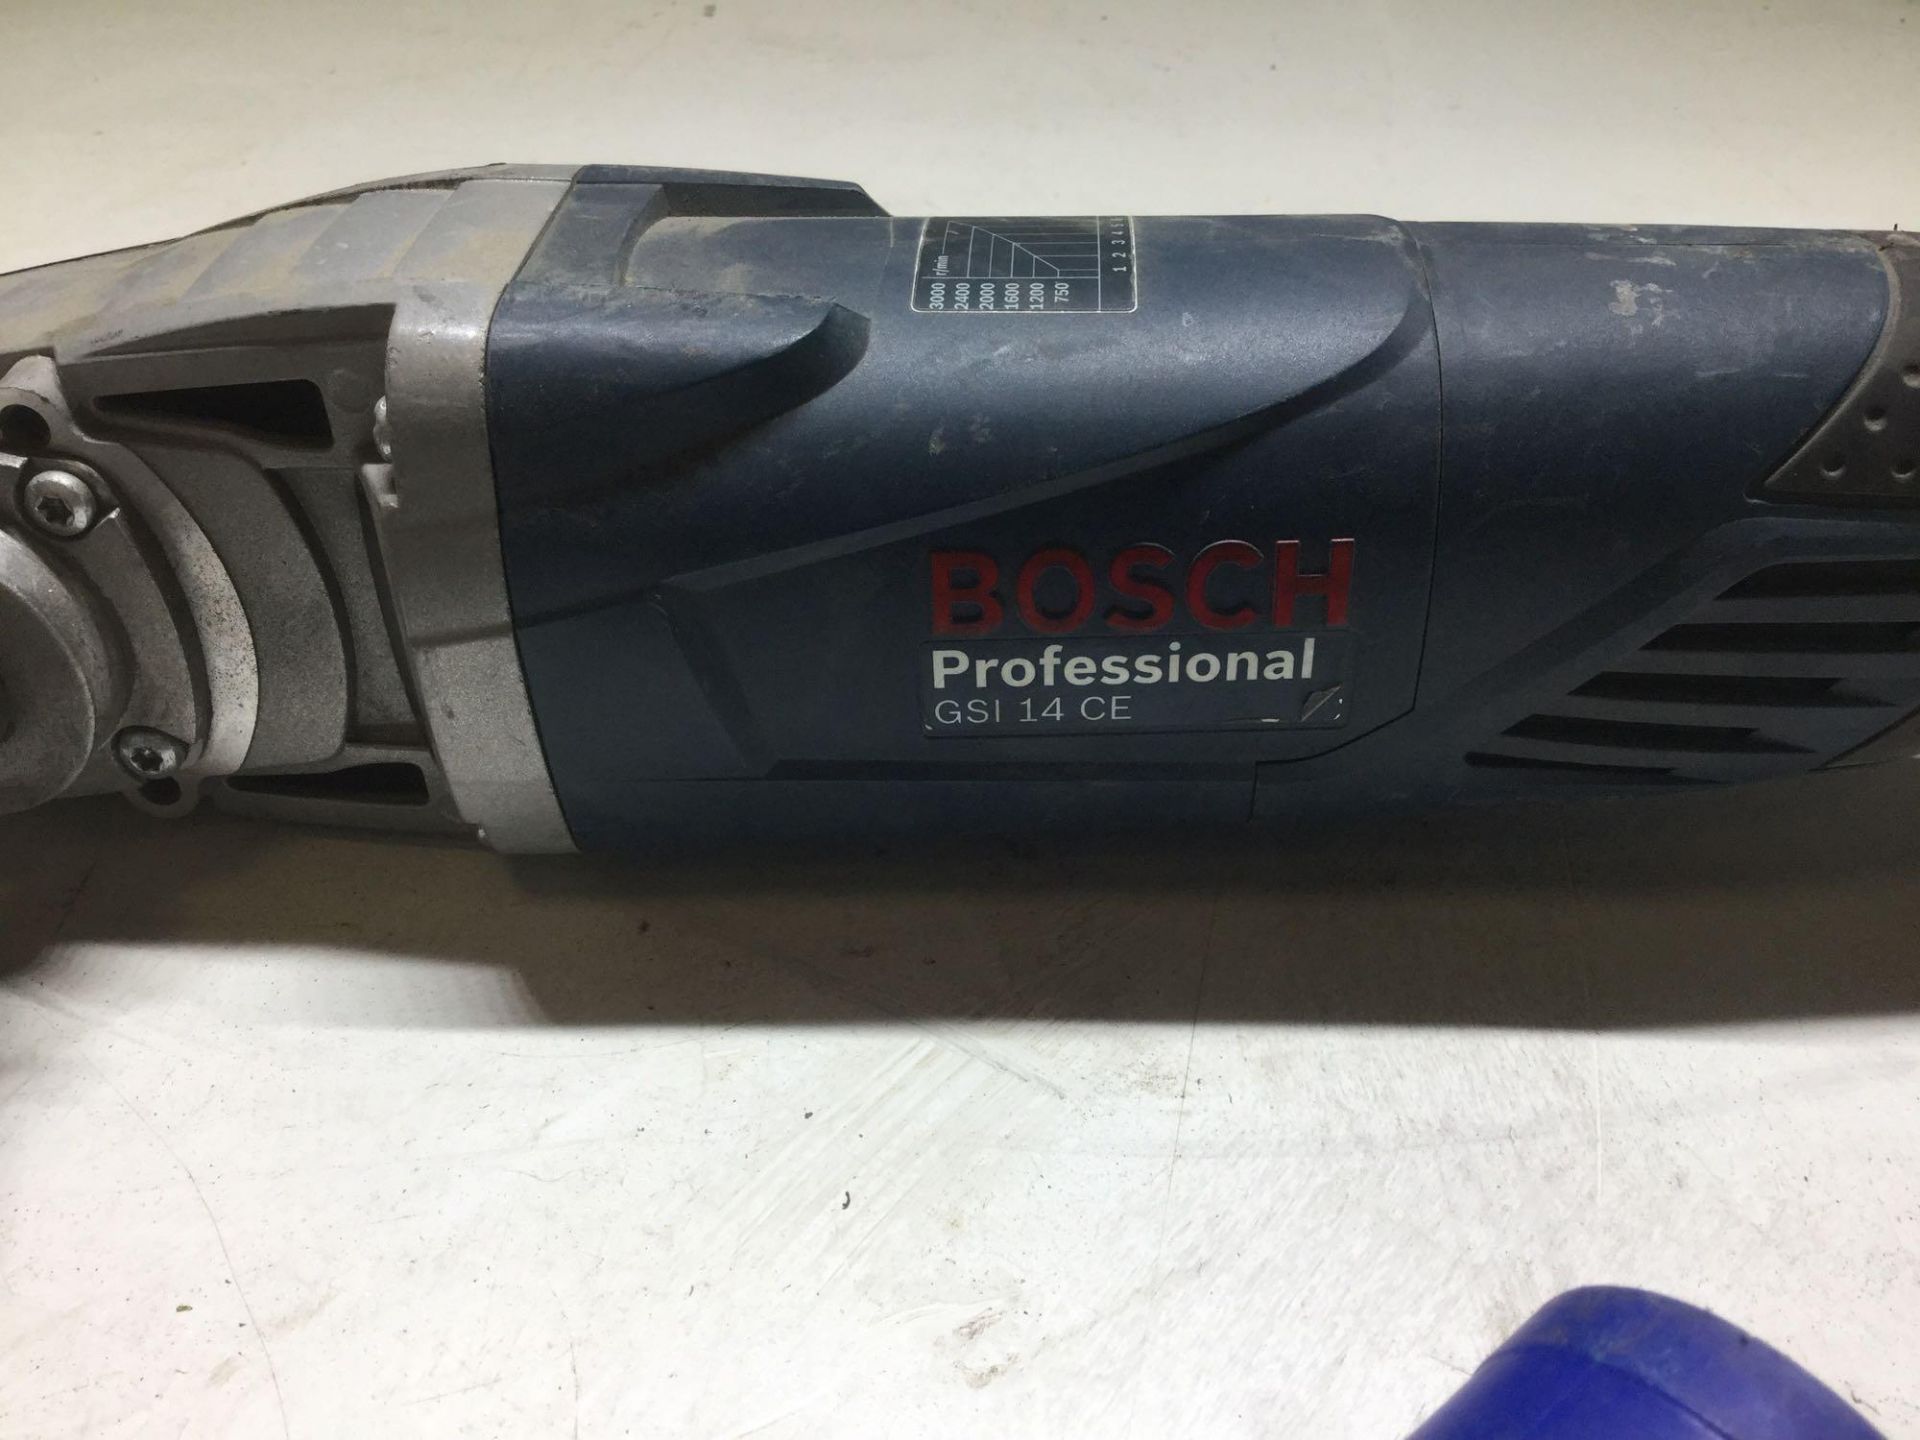 Bosch professional polisher model GS I 14CE 200 240v - Image 2 of 2